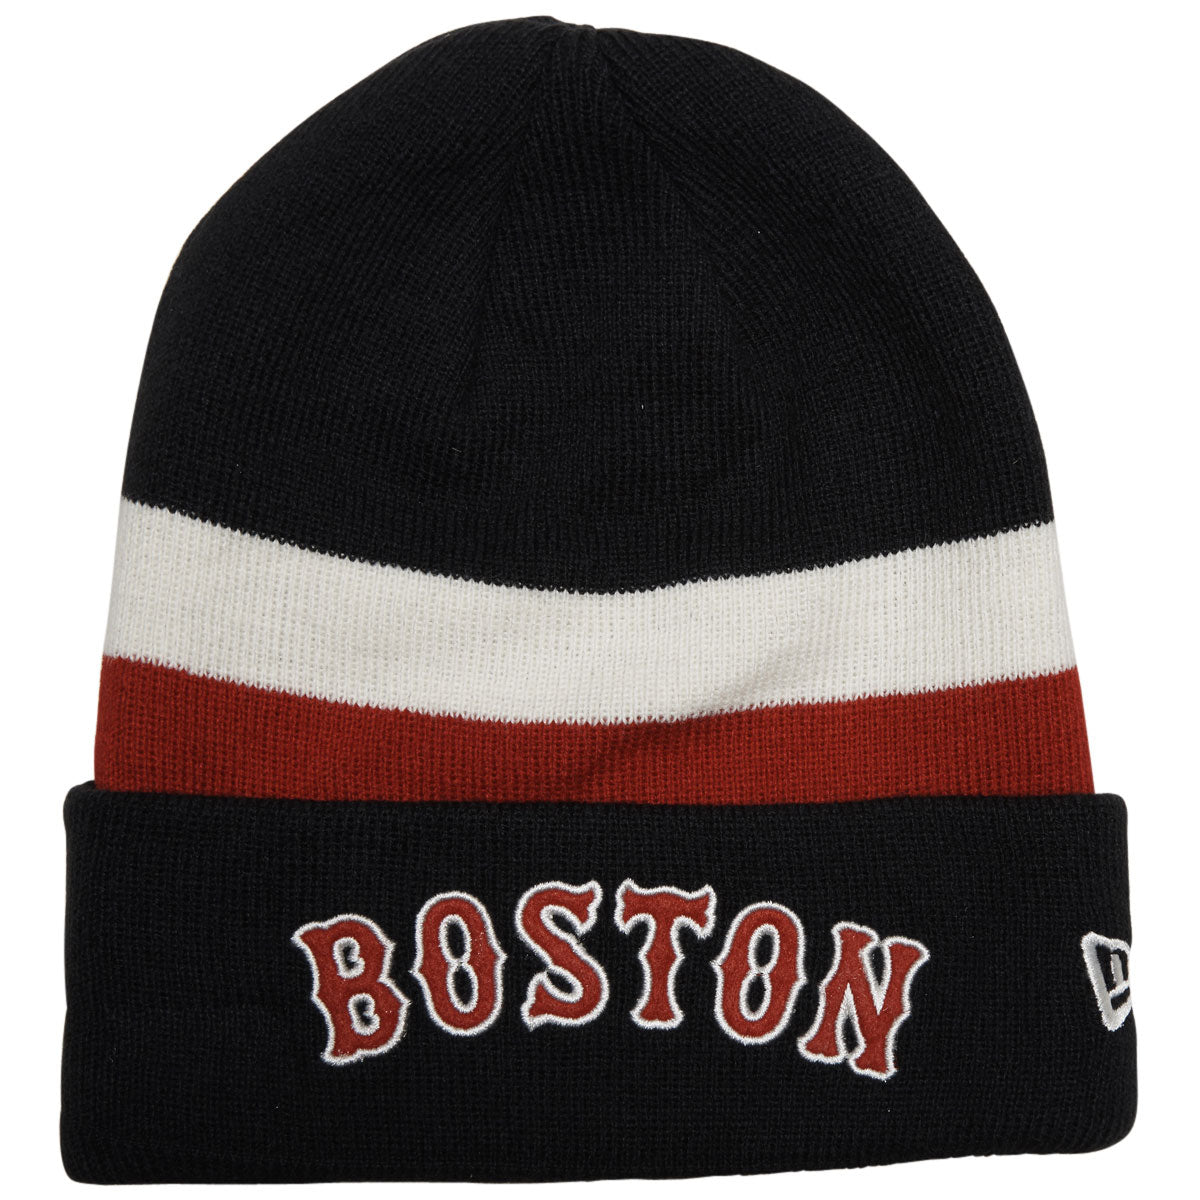 New Era Knit Medium Retro Cuff Knit Beanie - Boston Red Sox image 1